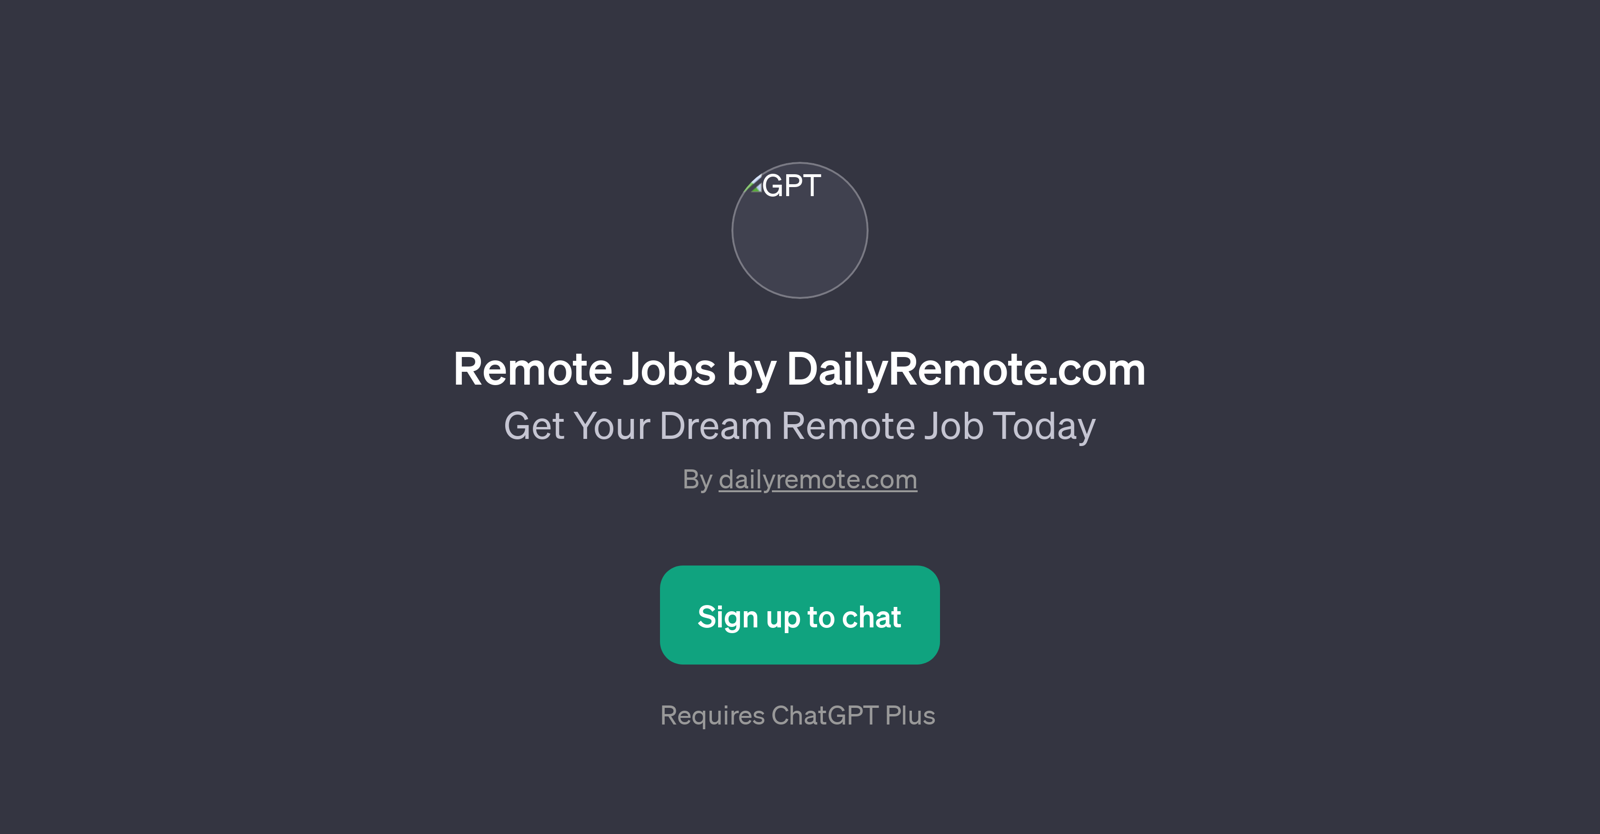 Remote Jobs by DailyRemote.com website